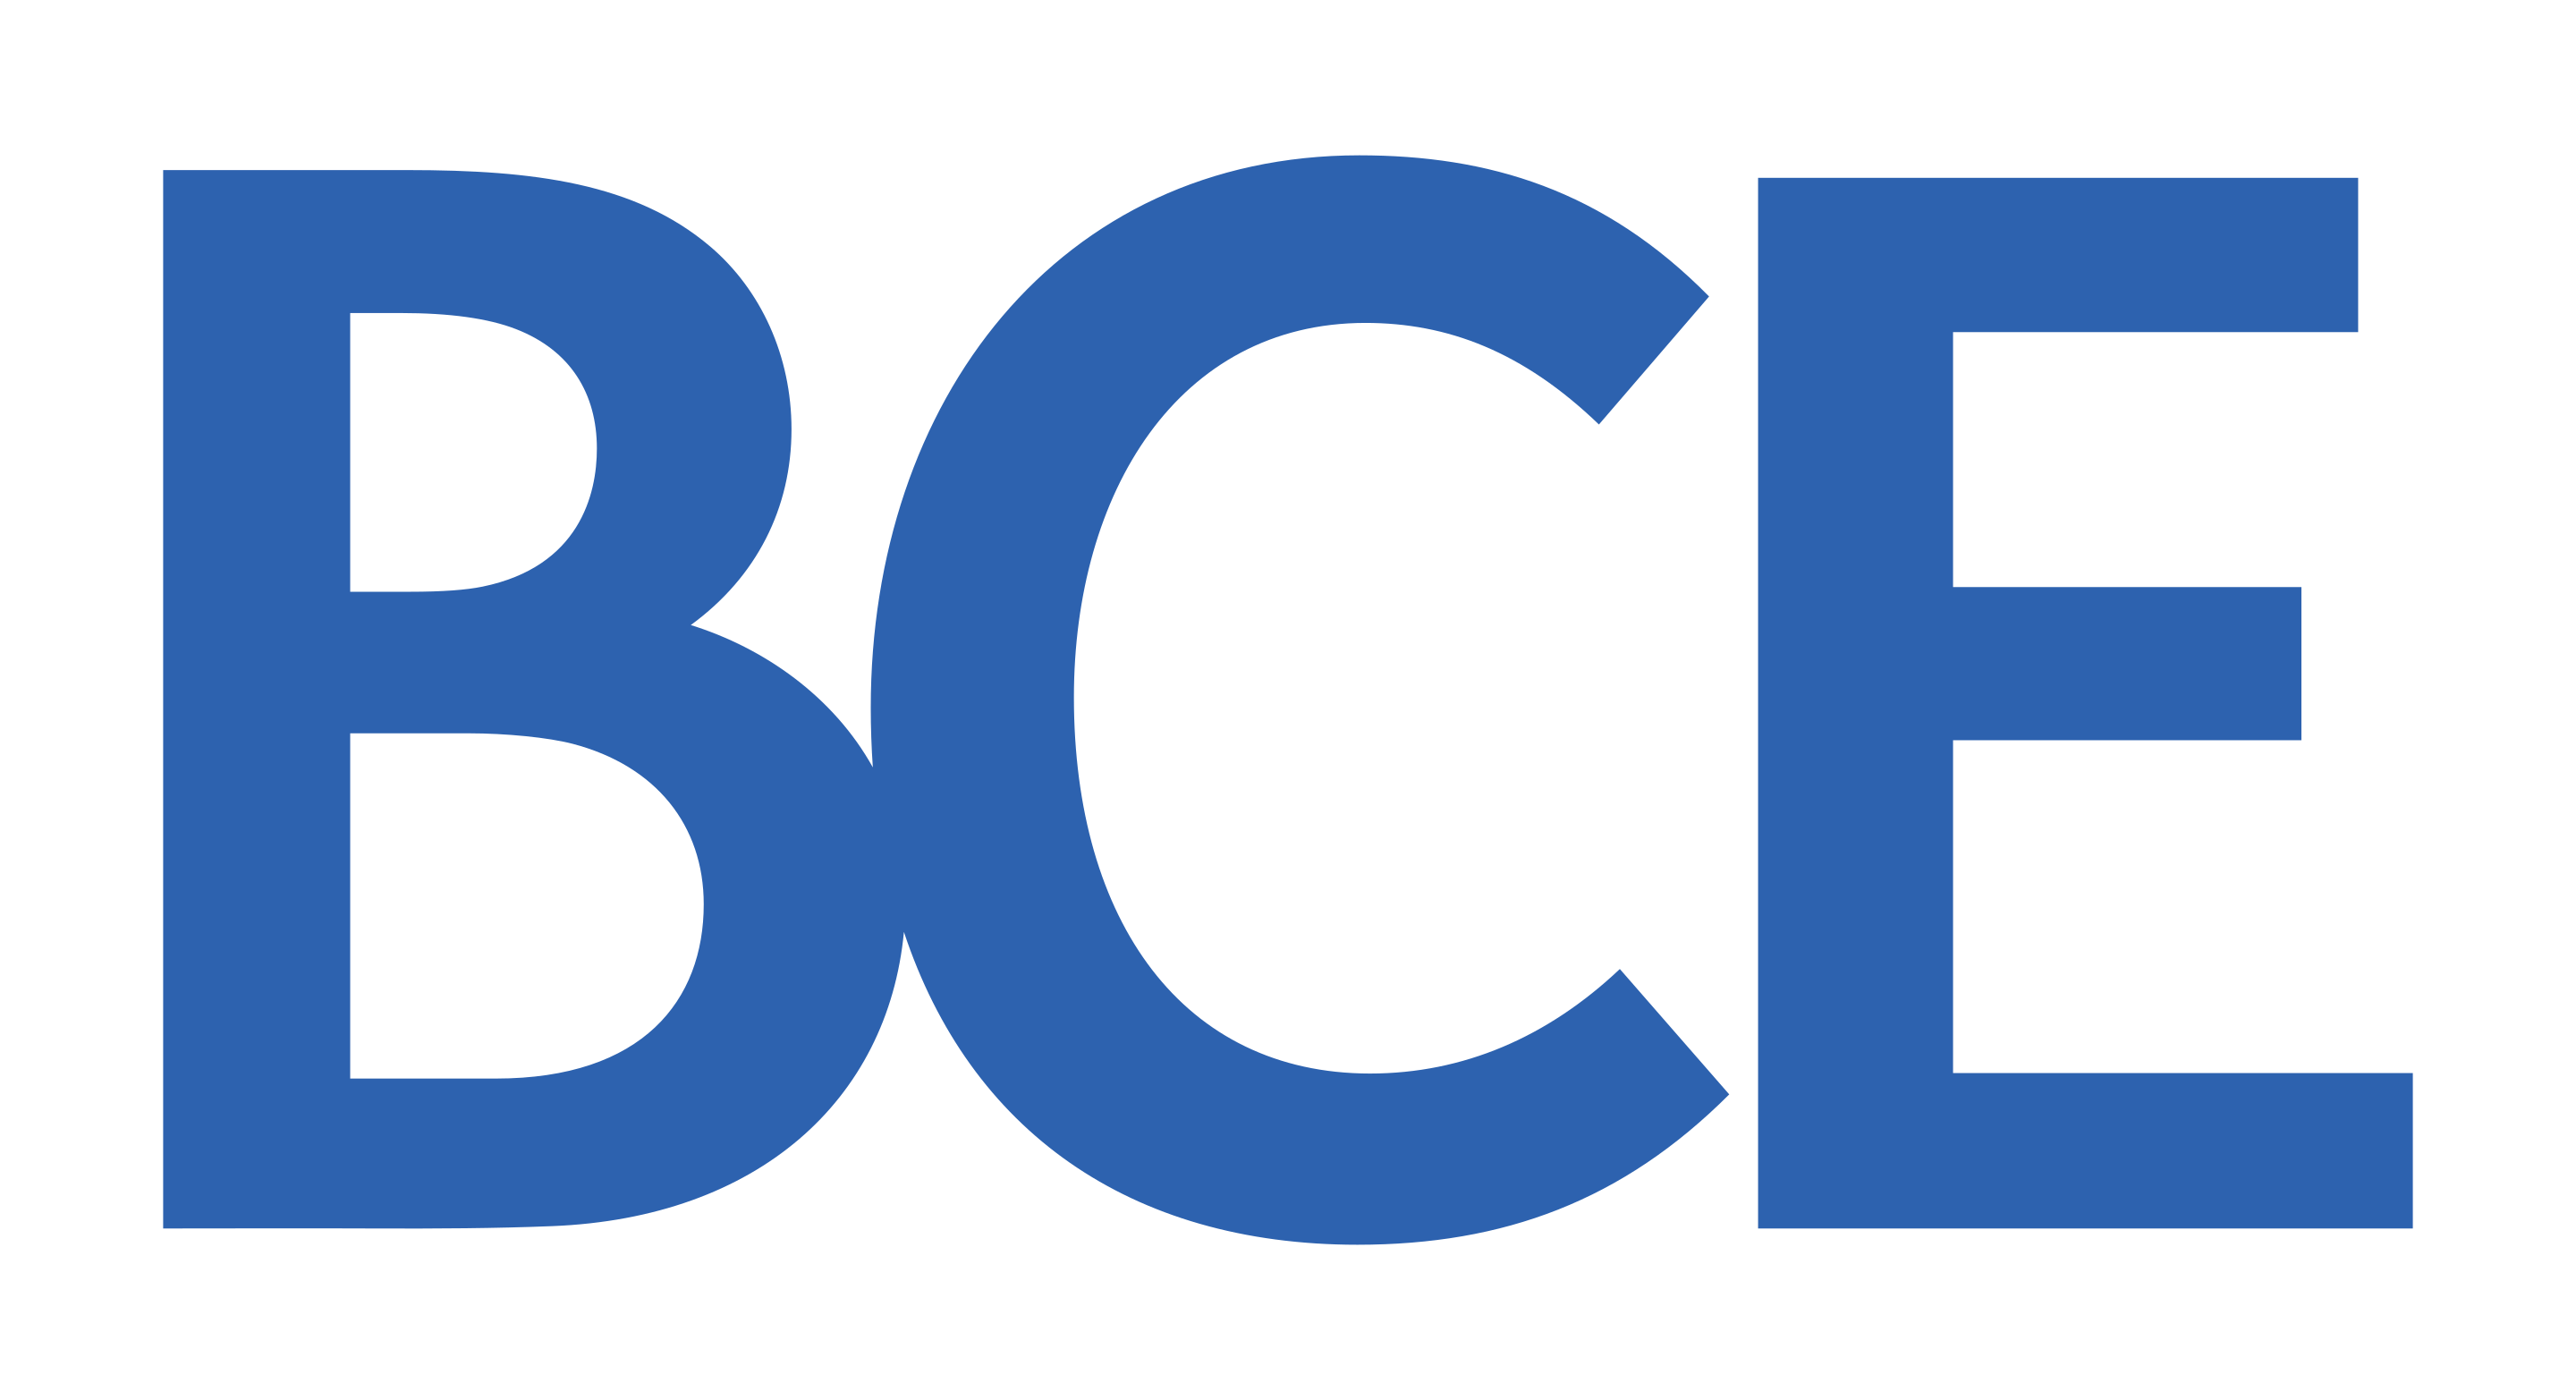 BCE - Bell Canada Enterprises